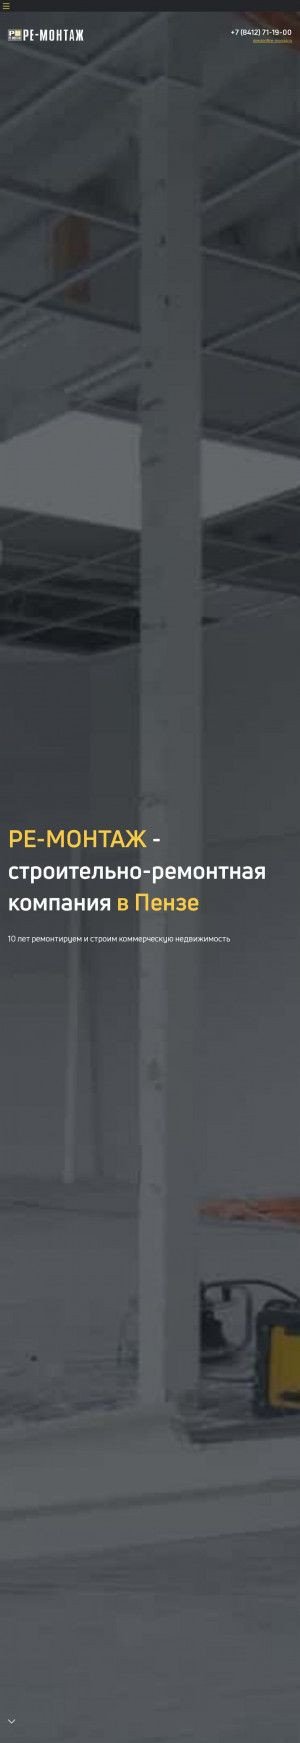 Предпросмотр для re-montag.ru — Ре-монтаж